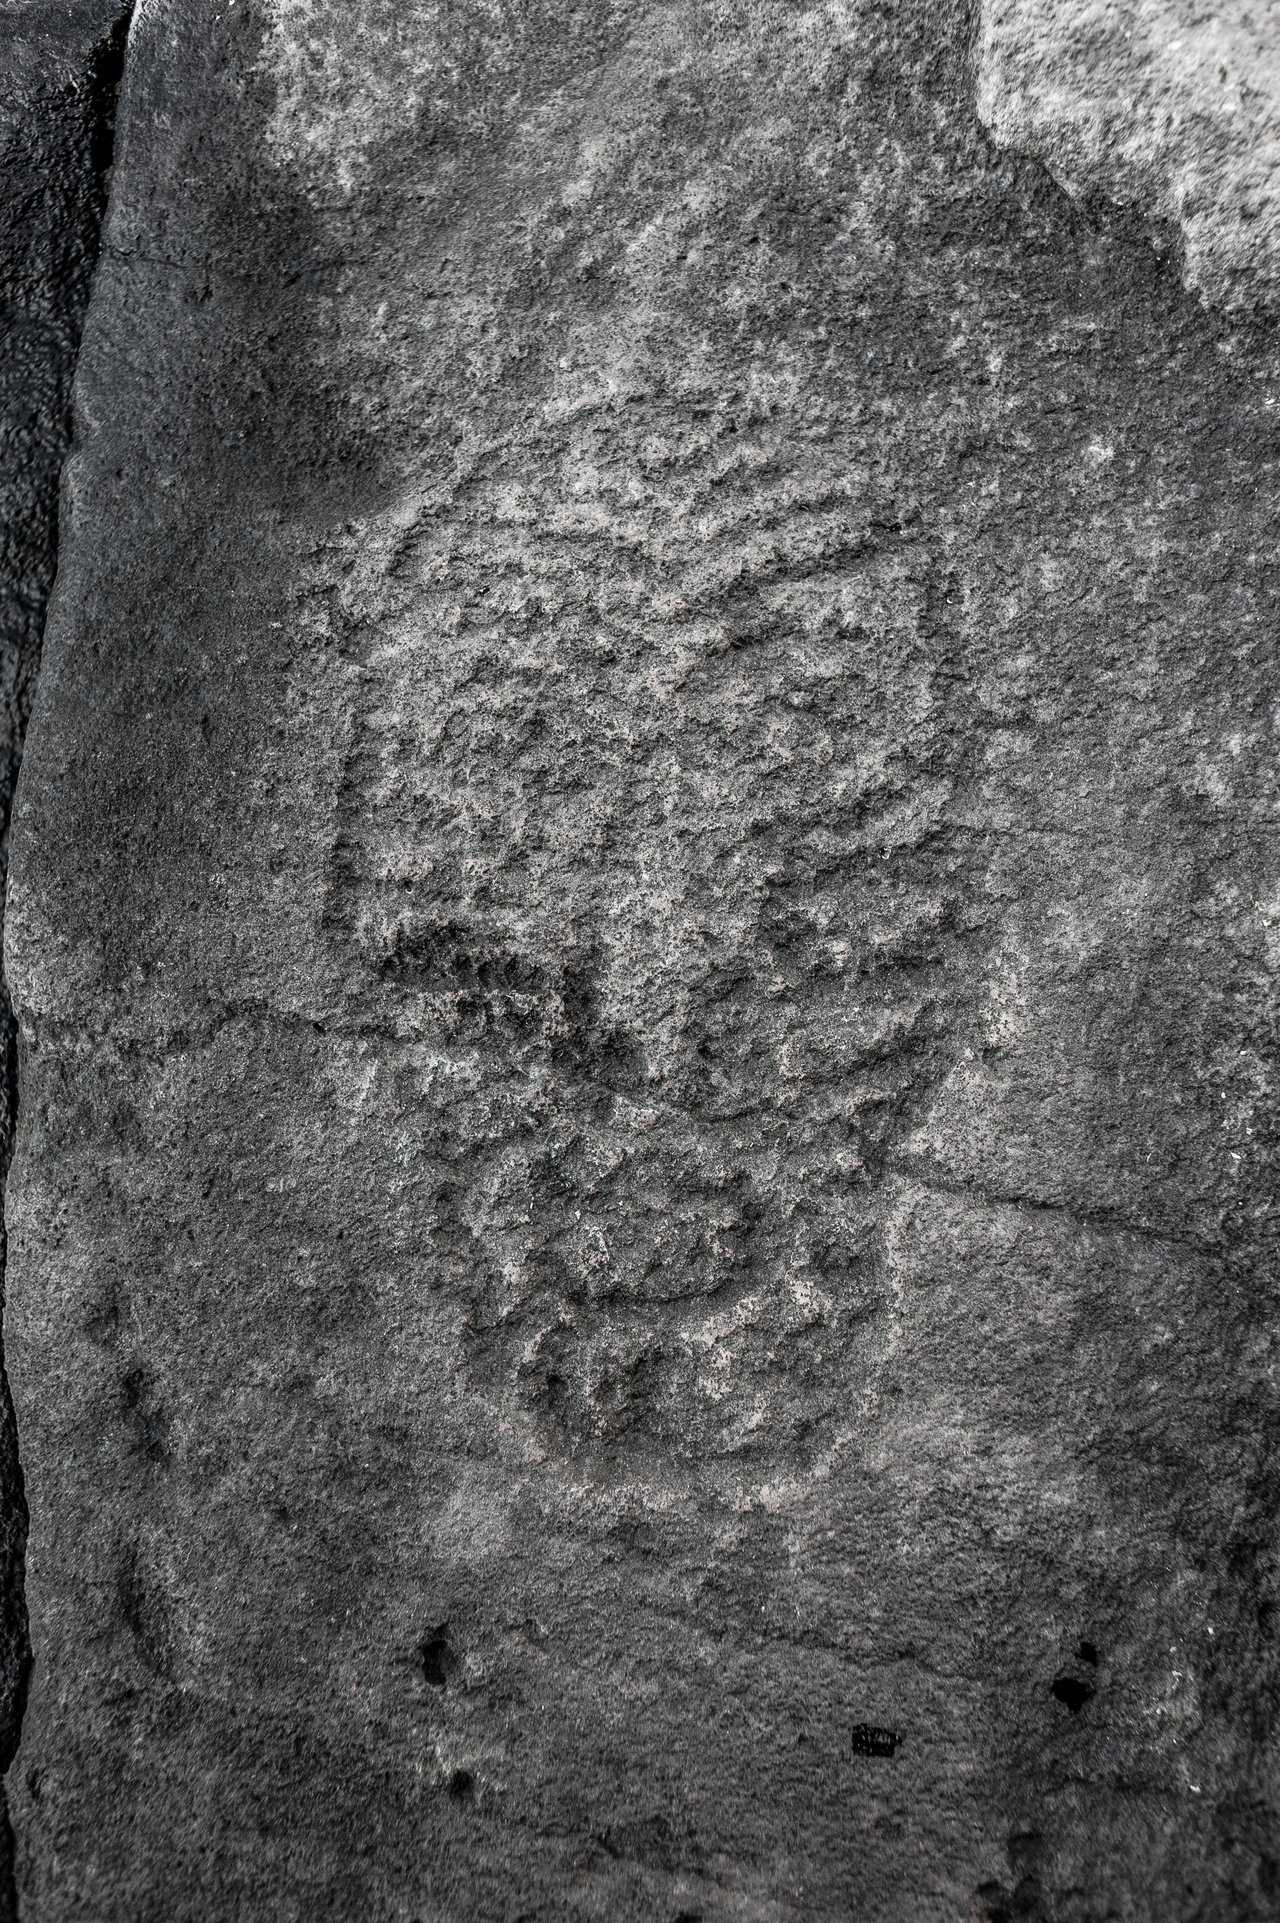 003 Petroglyph Foto 1.jpg